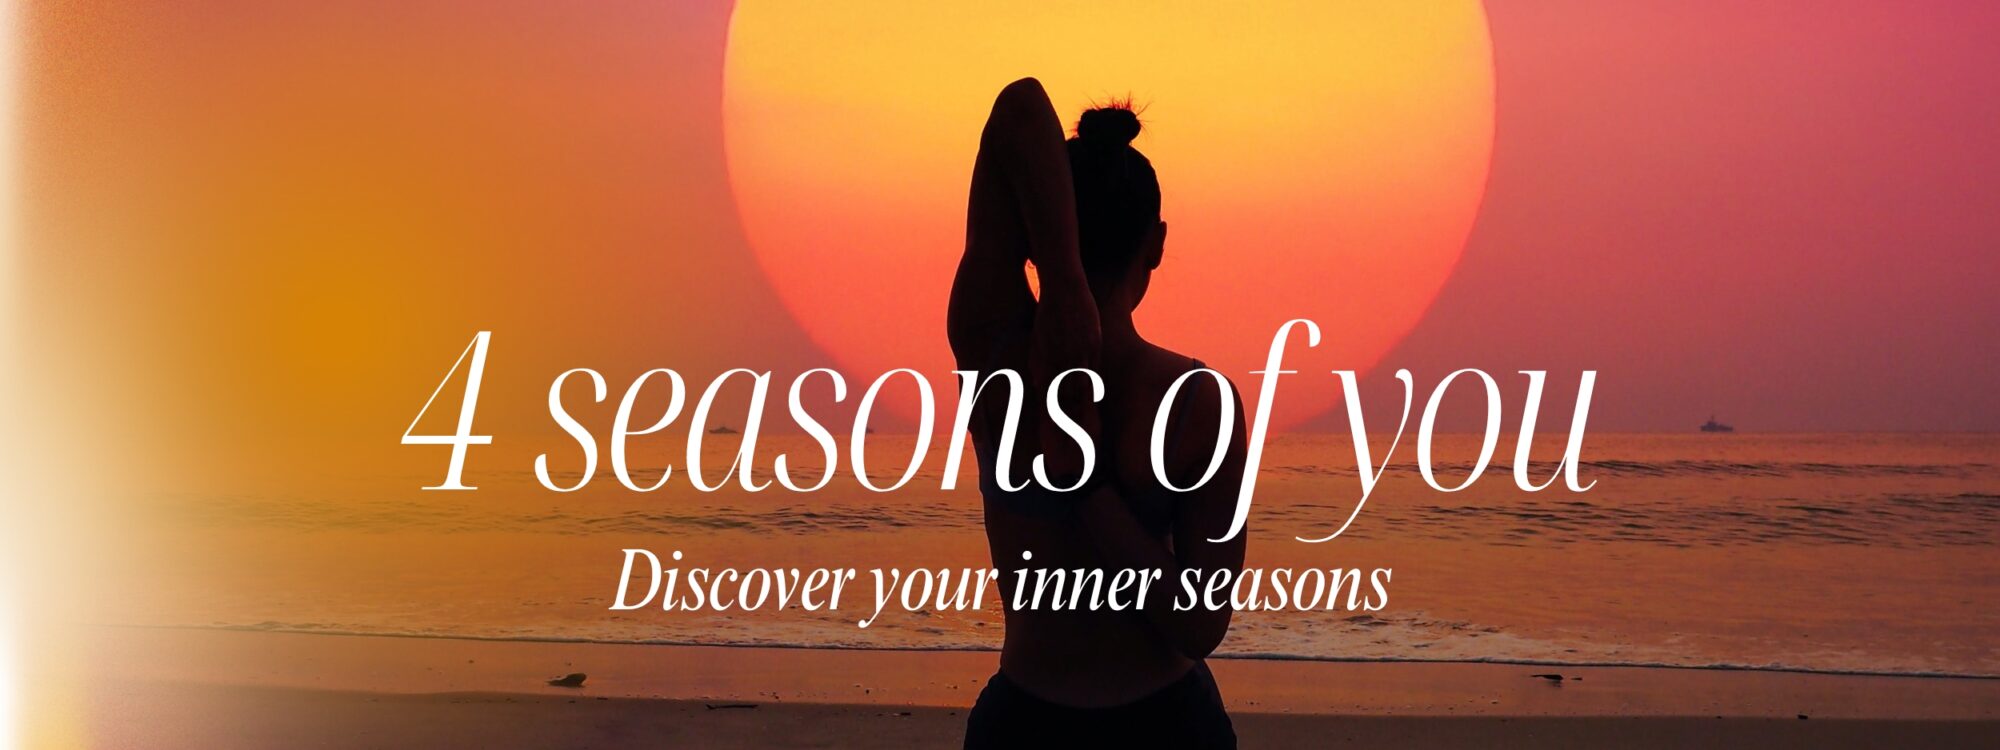 4 seasons of you cycle seasons